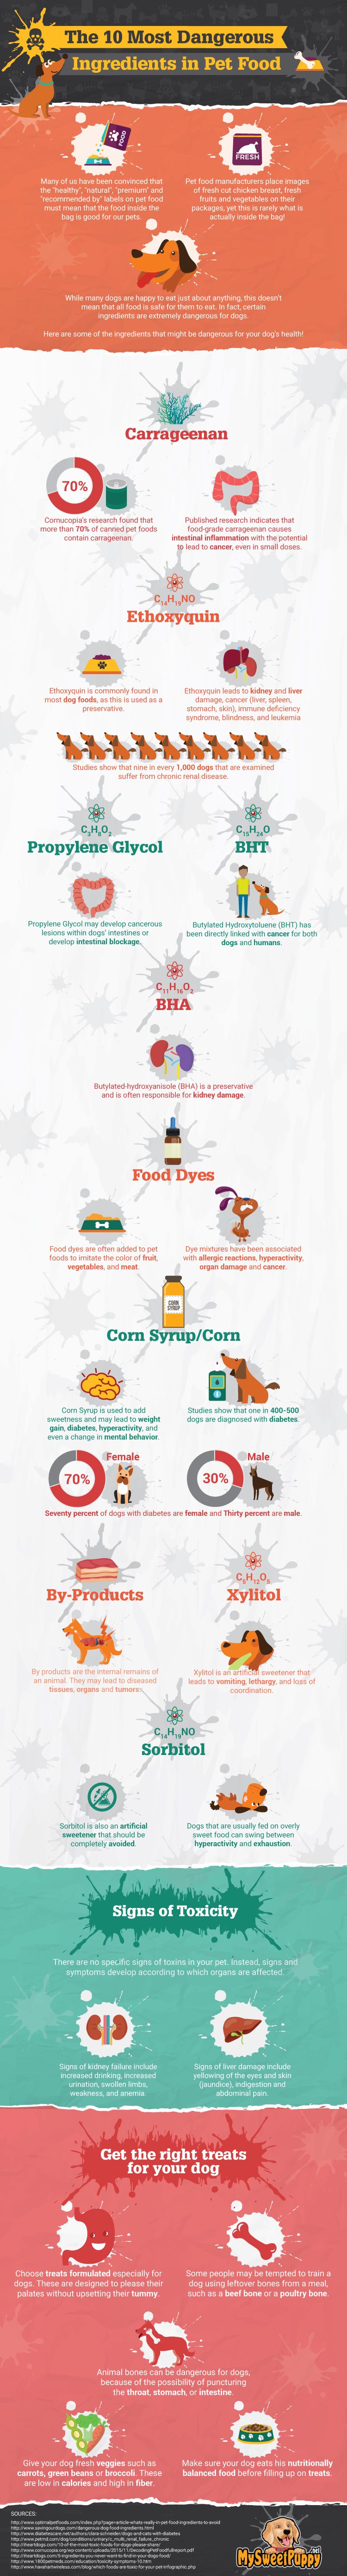 infographic 10 bad pet food ingredients